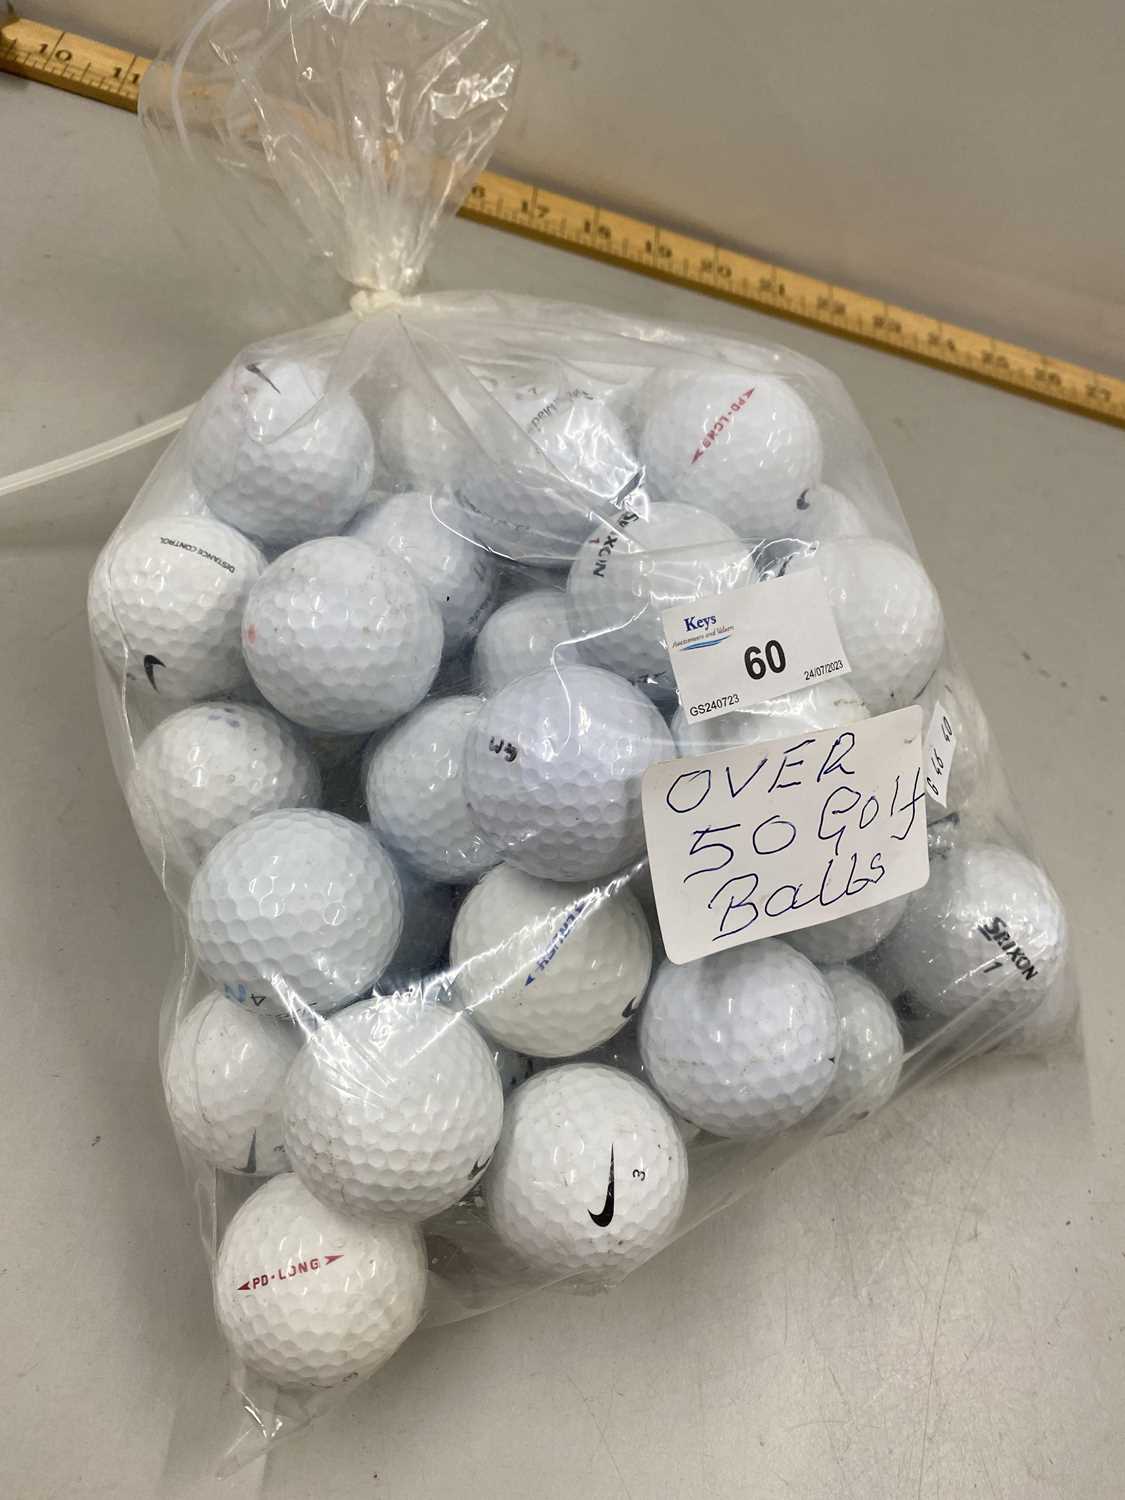 Bag of approx 50 golf balls